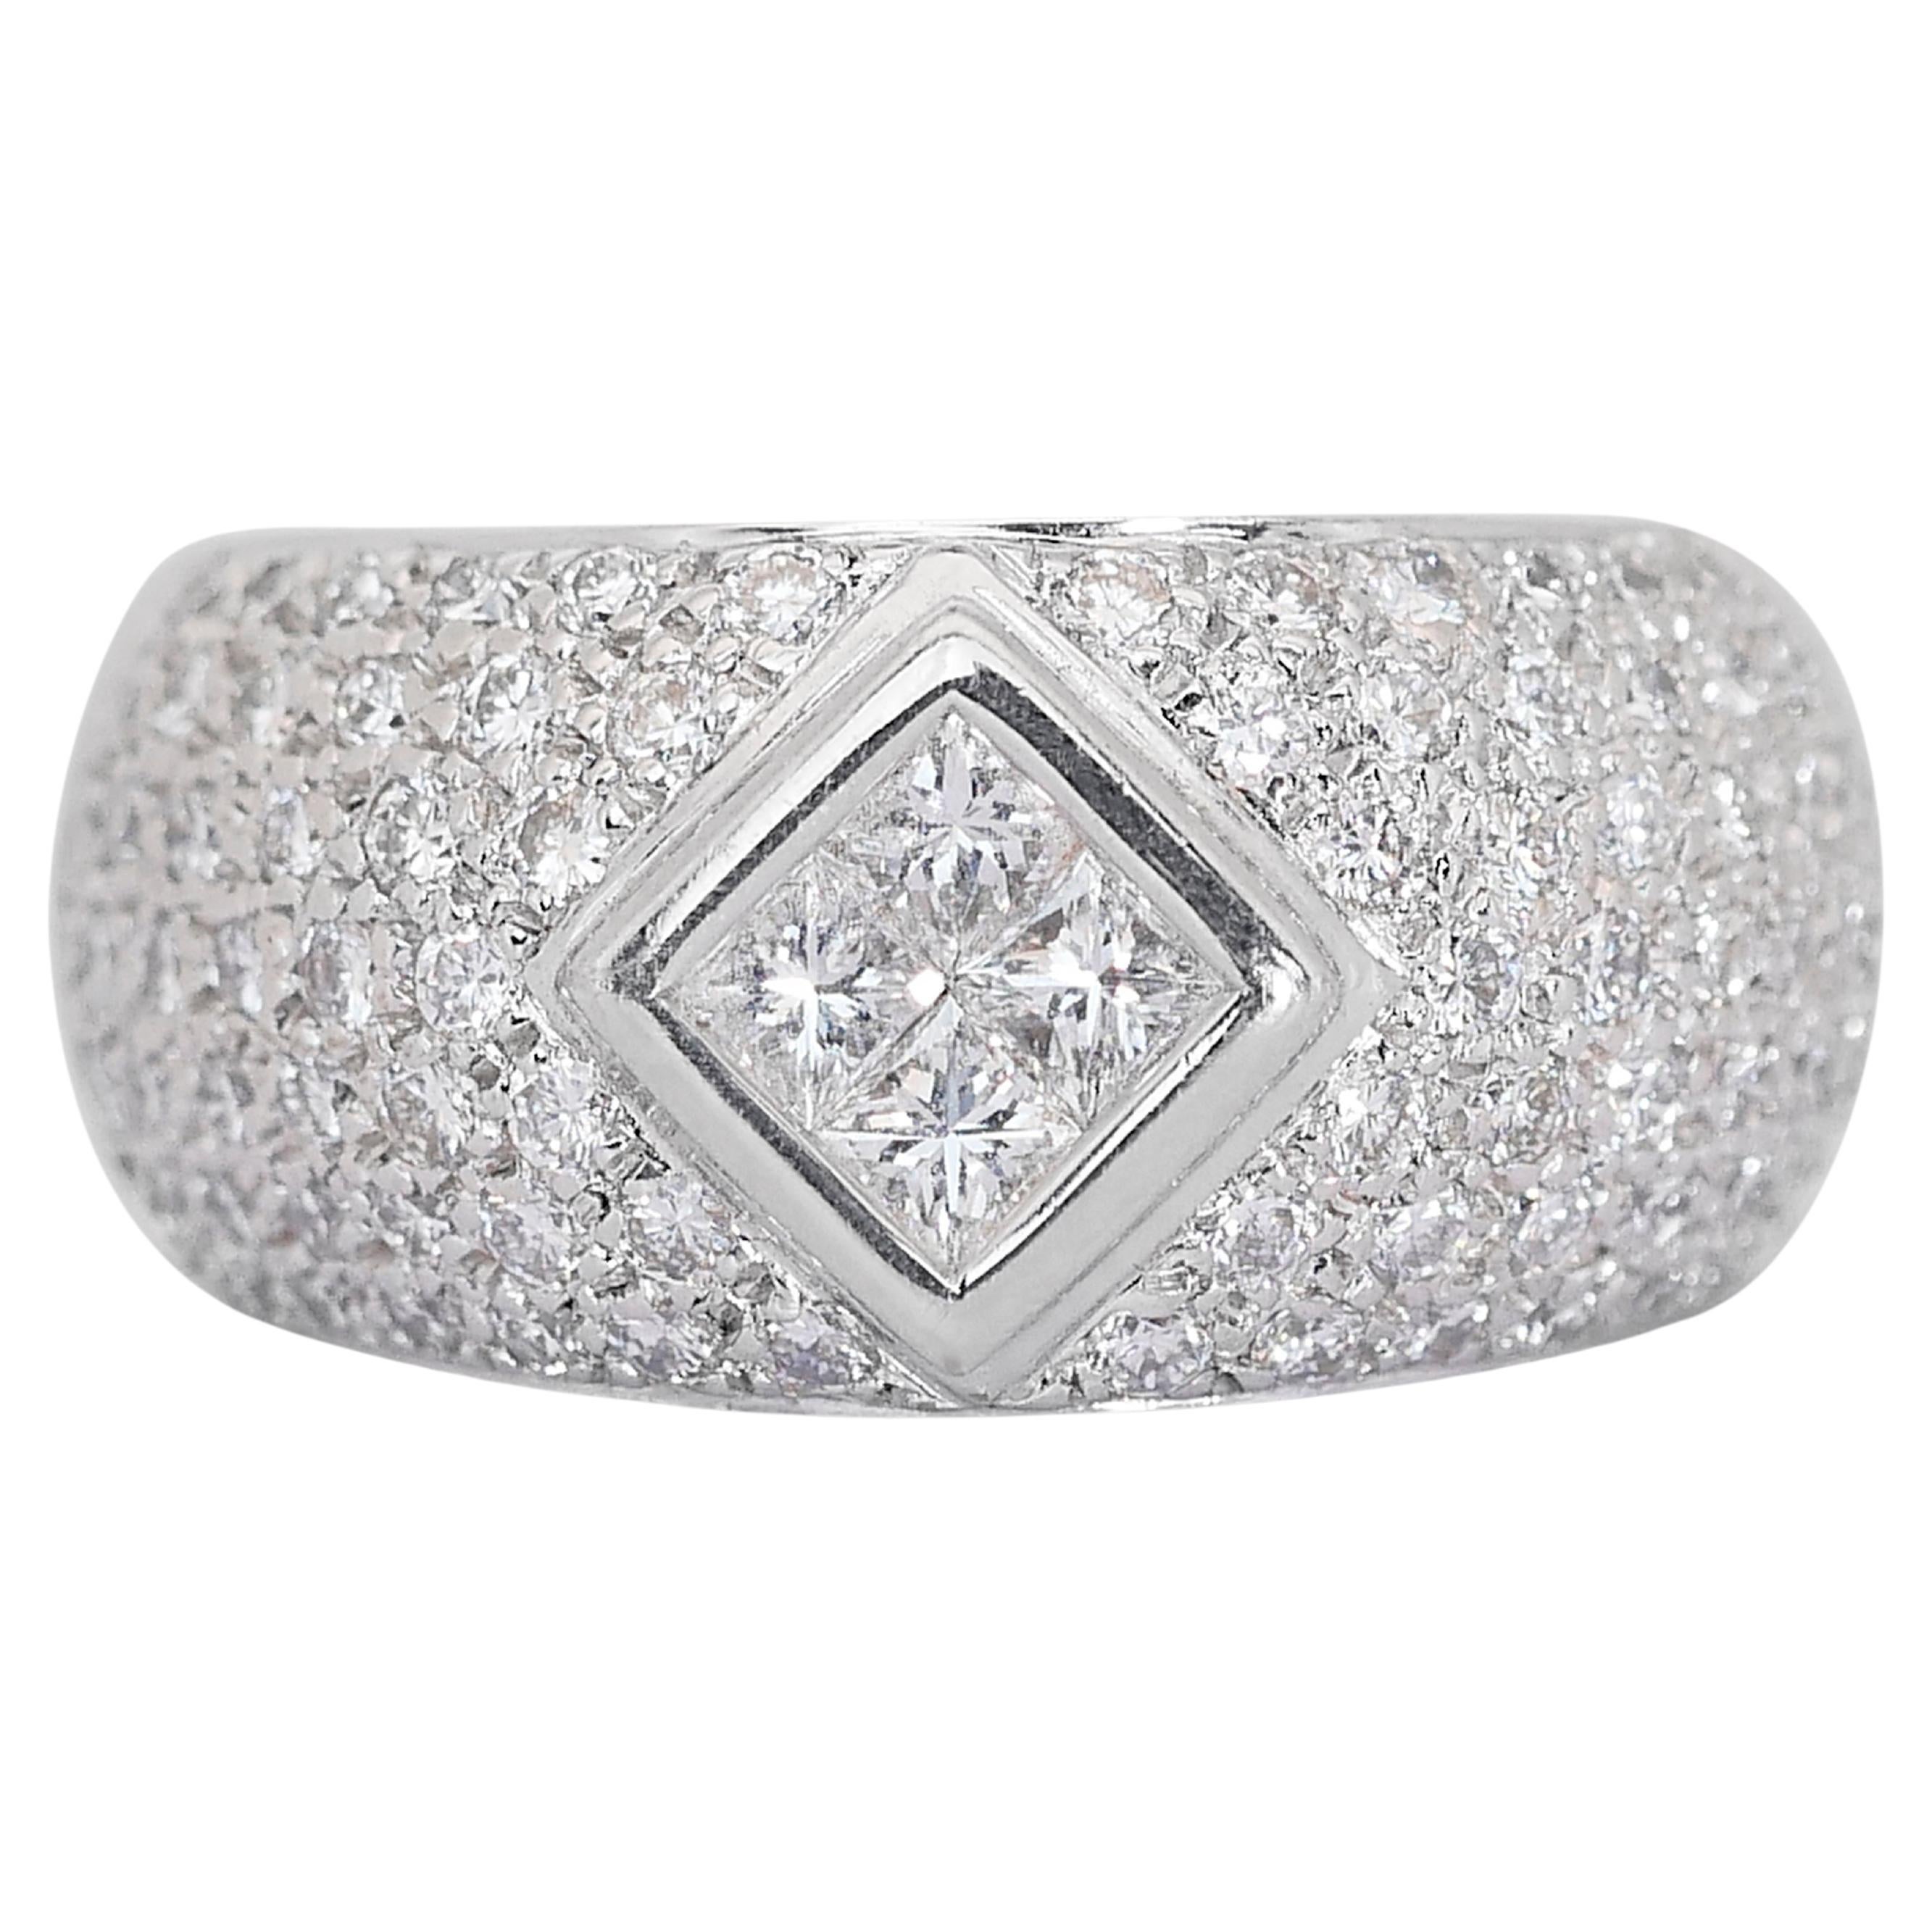 Stunning 3.15 ct Diamond Dome Ring in 18k White Gold - IGI Certified